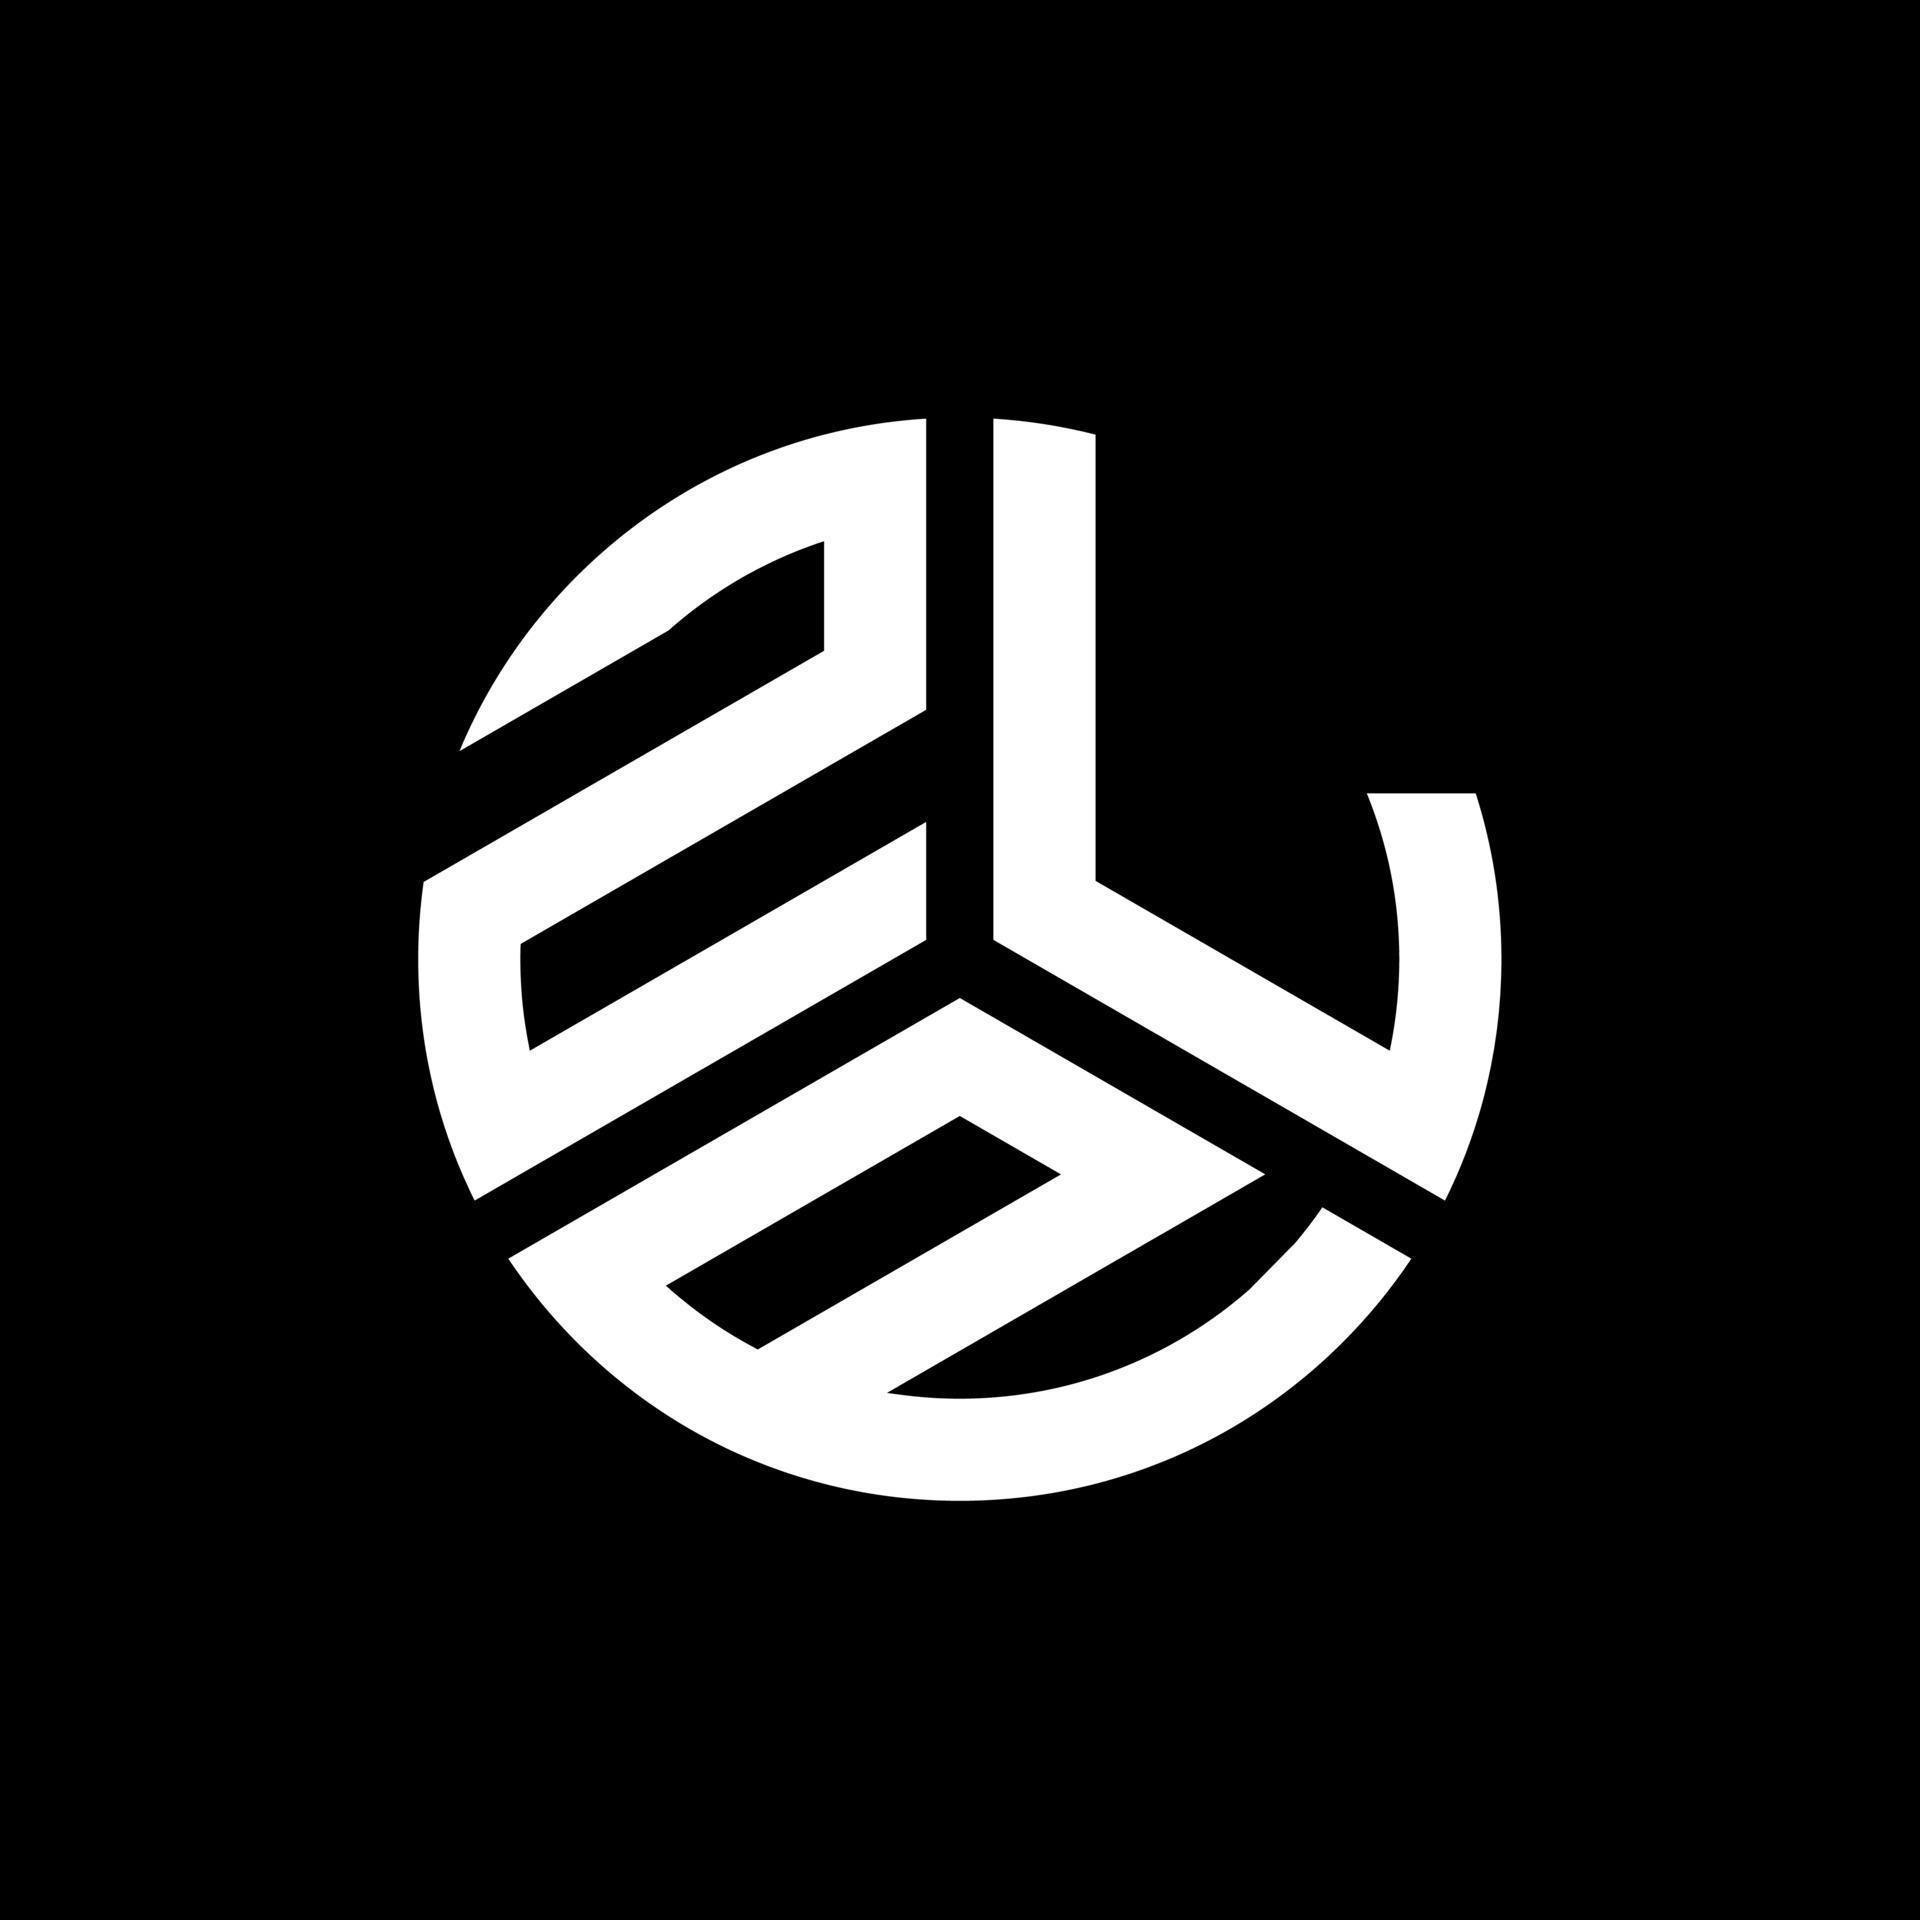 zlp brief logo ontwerp op zwarte achtergrond. zlp creatieve initialen brief logo concept. zlp brief ontwerp. vector